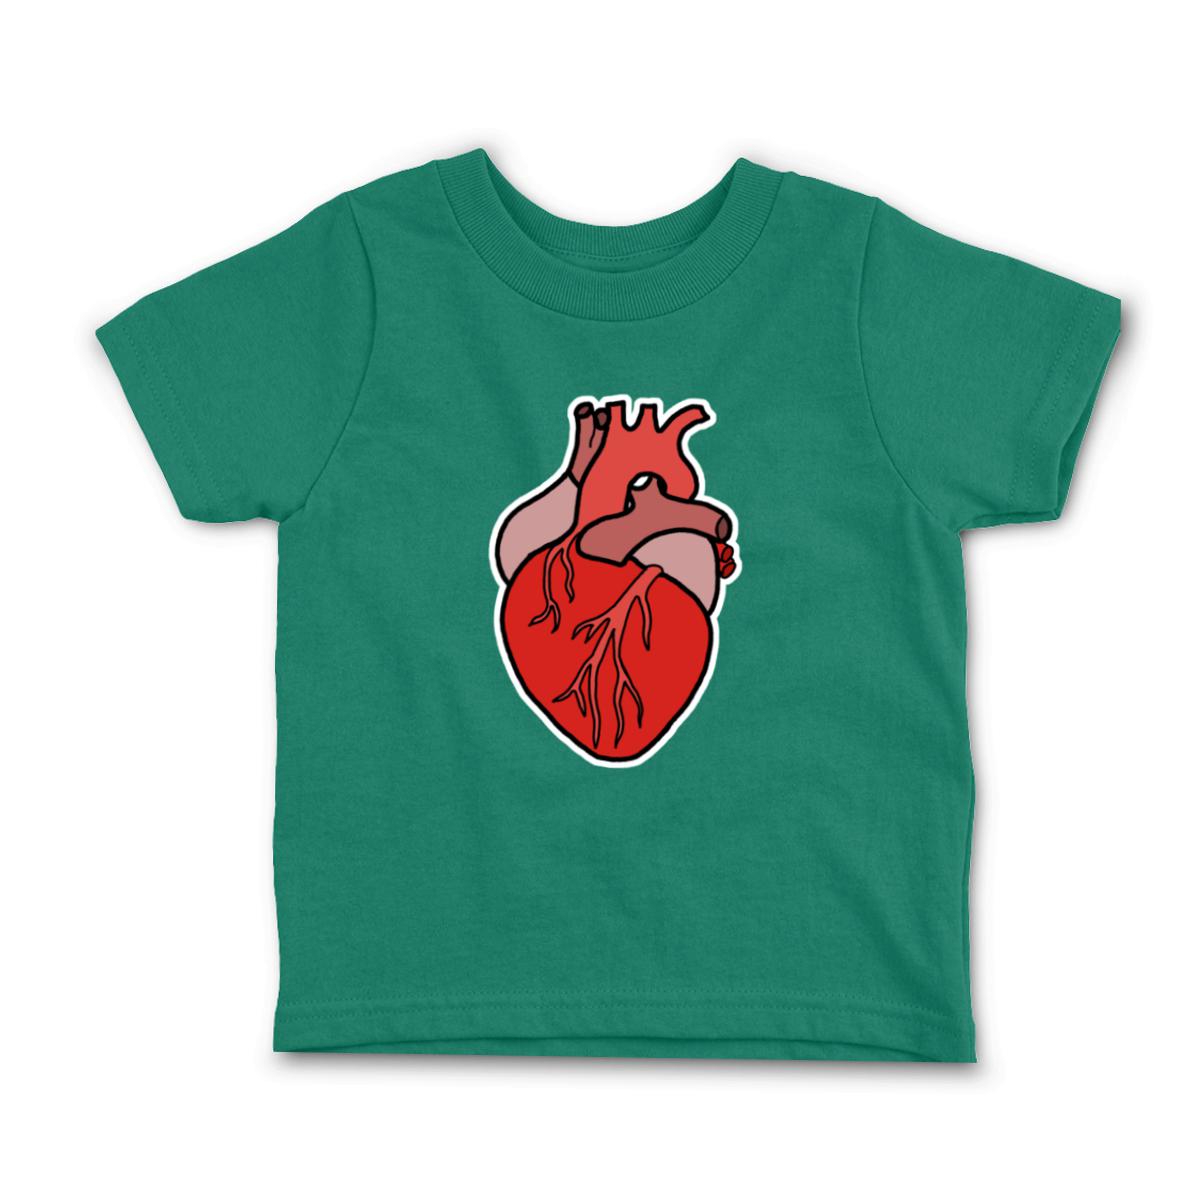 Illustrative Heart Toddler Tee 4T kelly